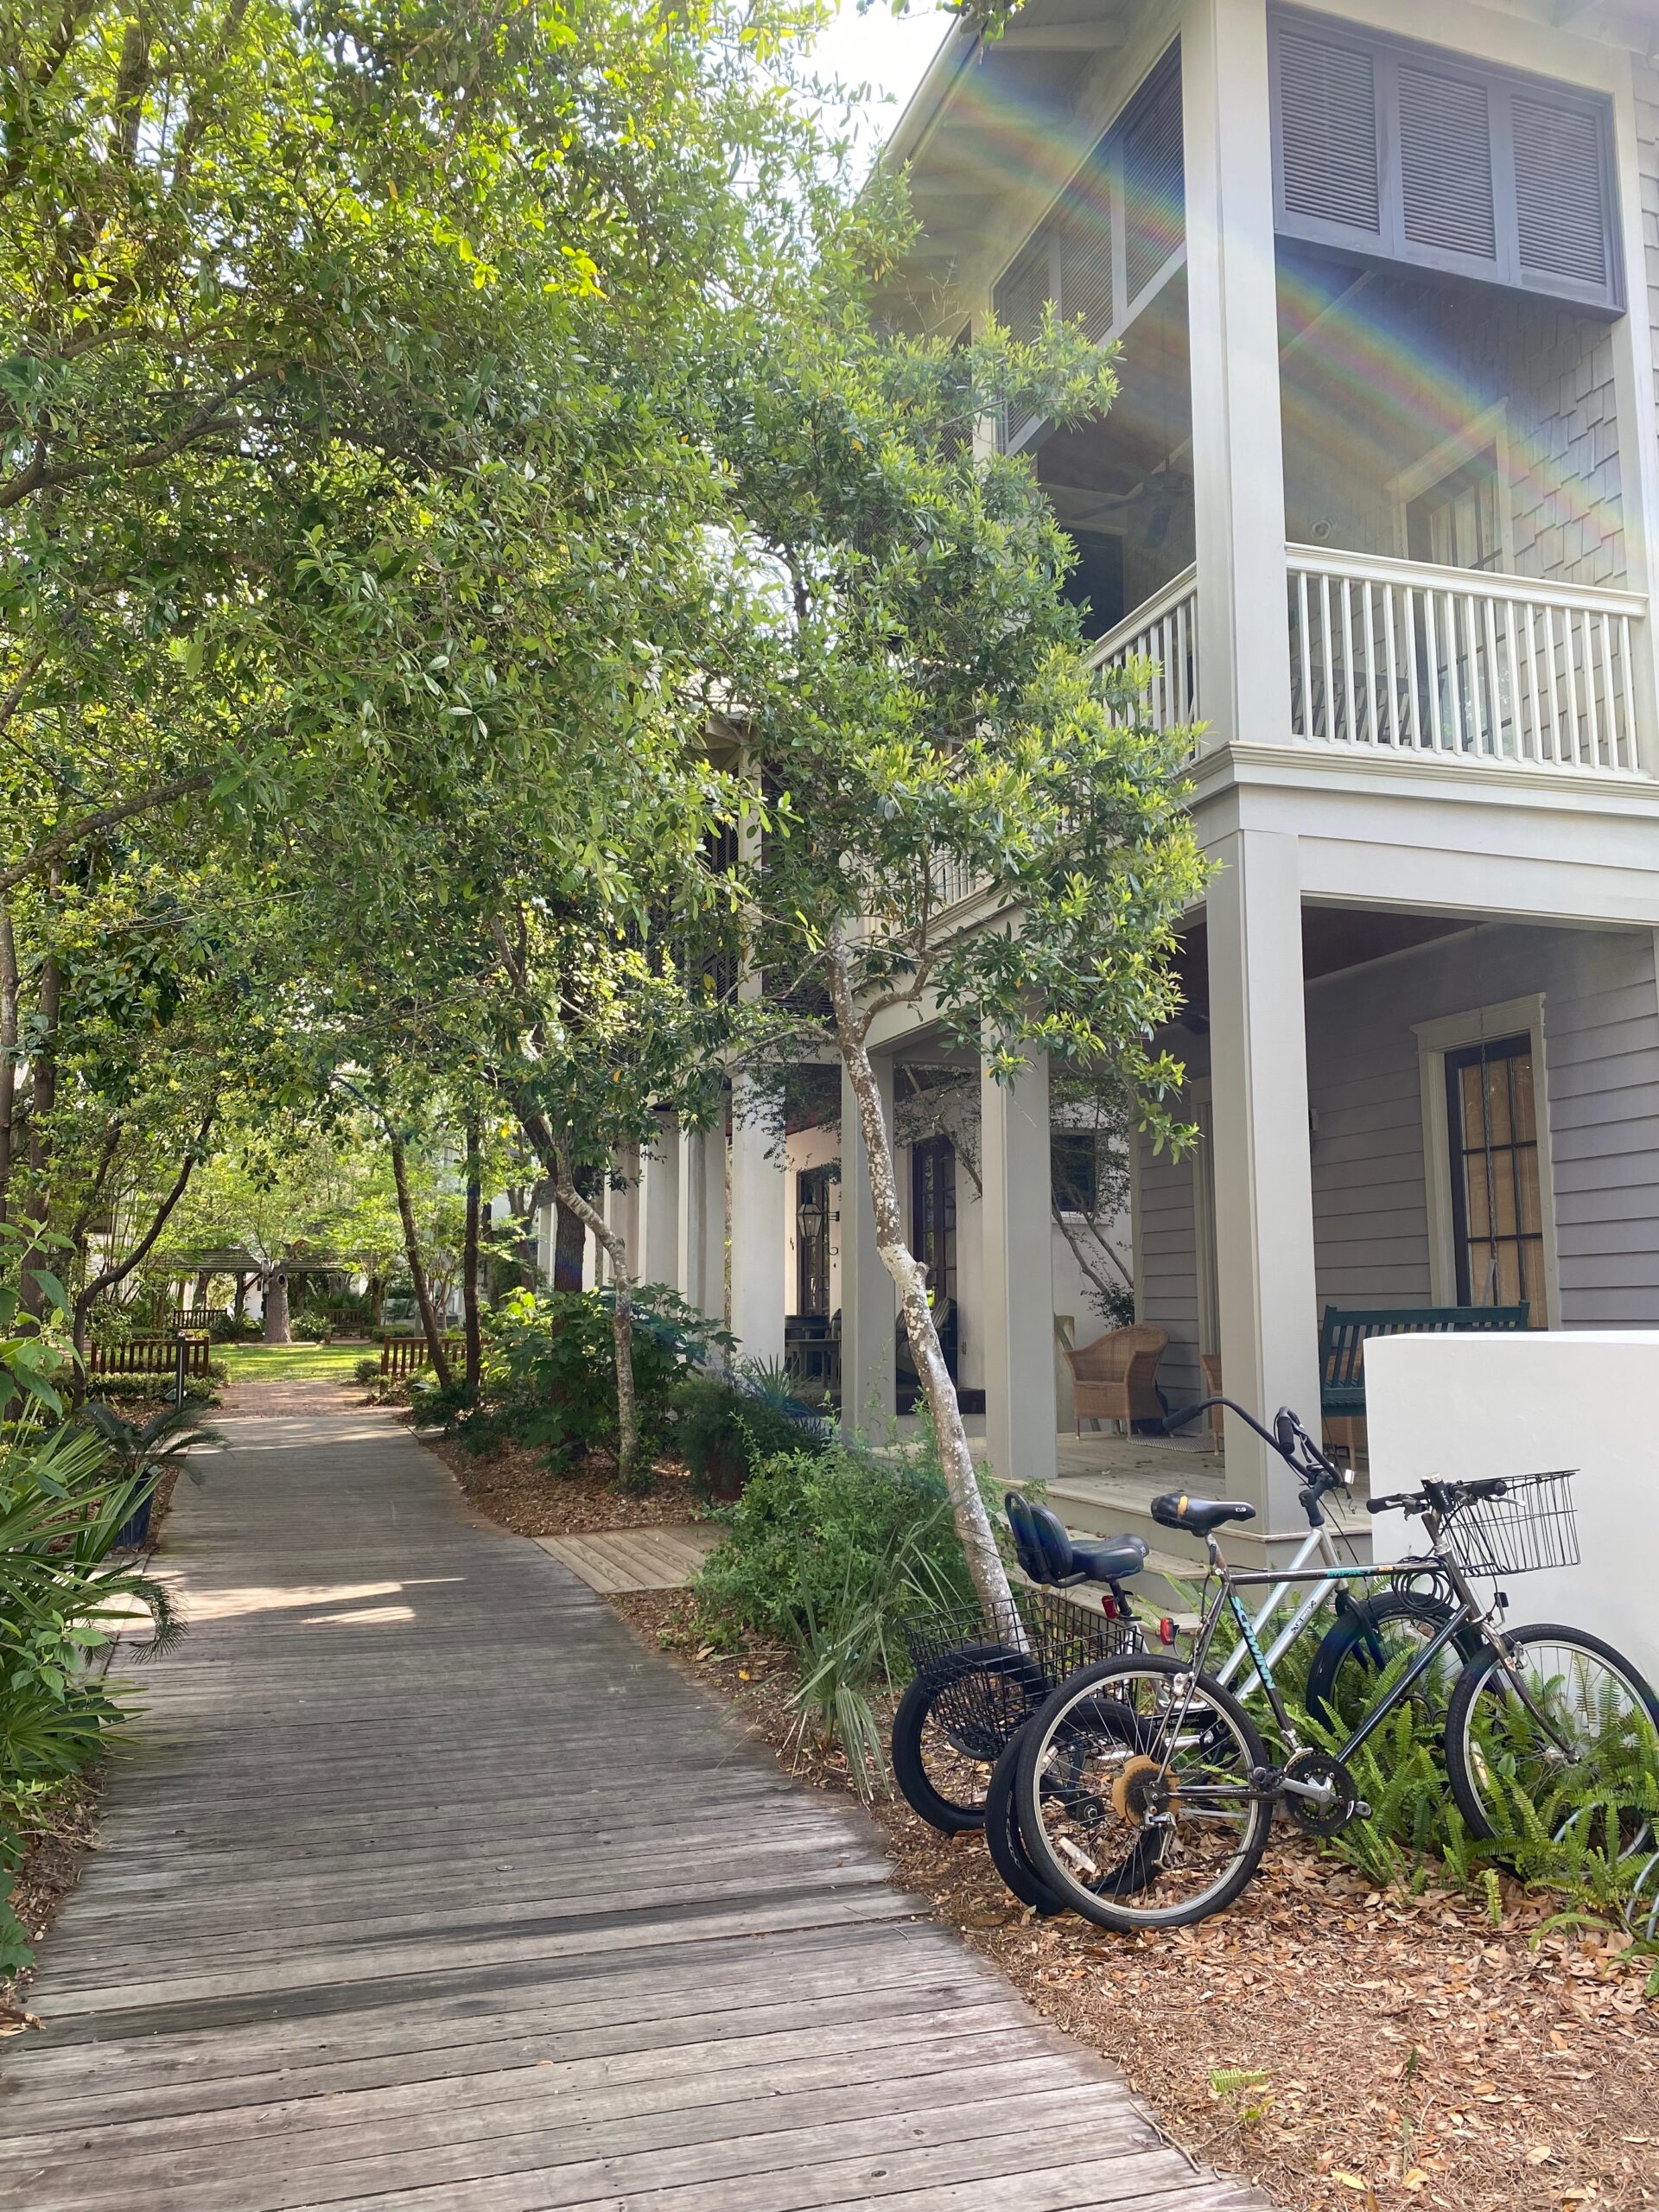 Bikes against home in Rosemary Beach, FL